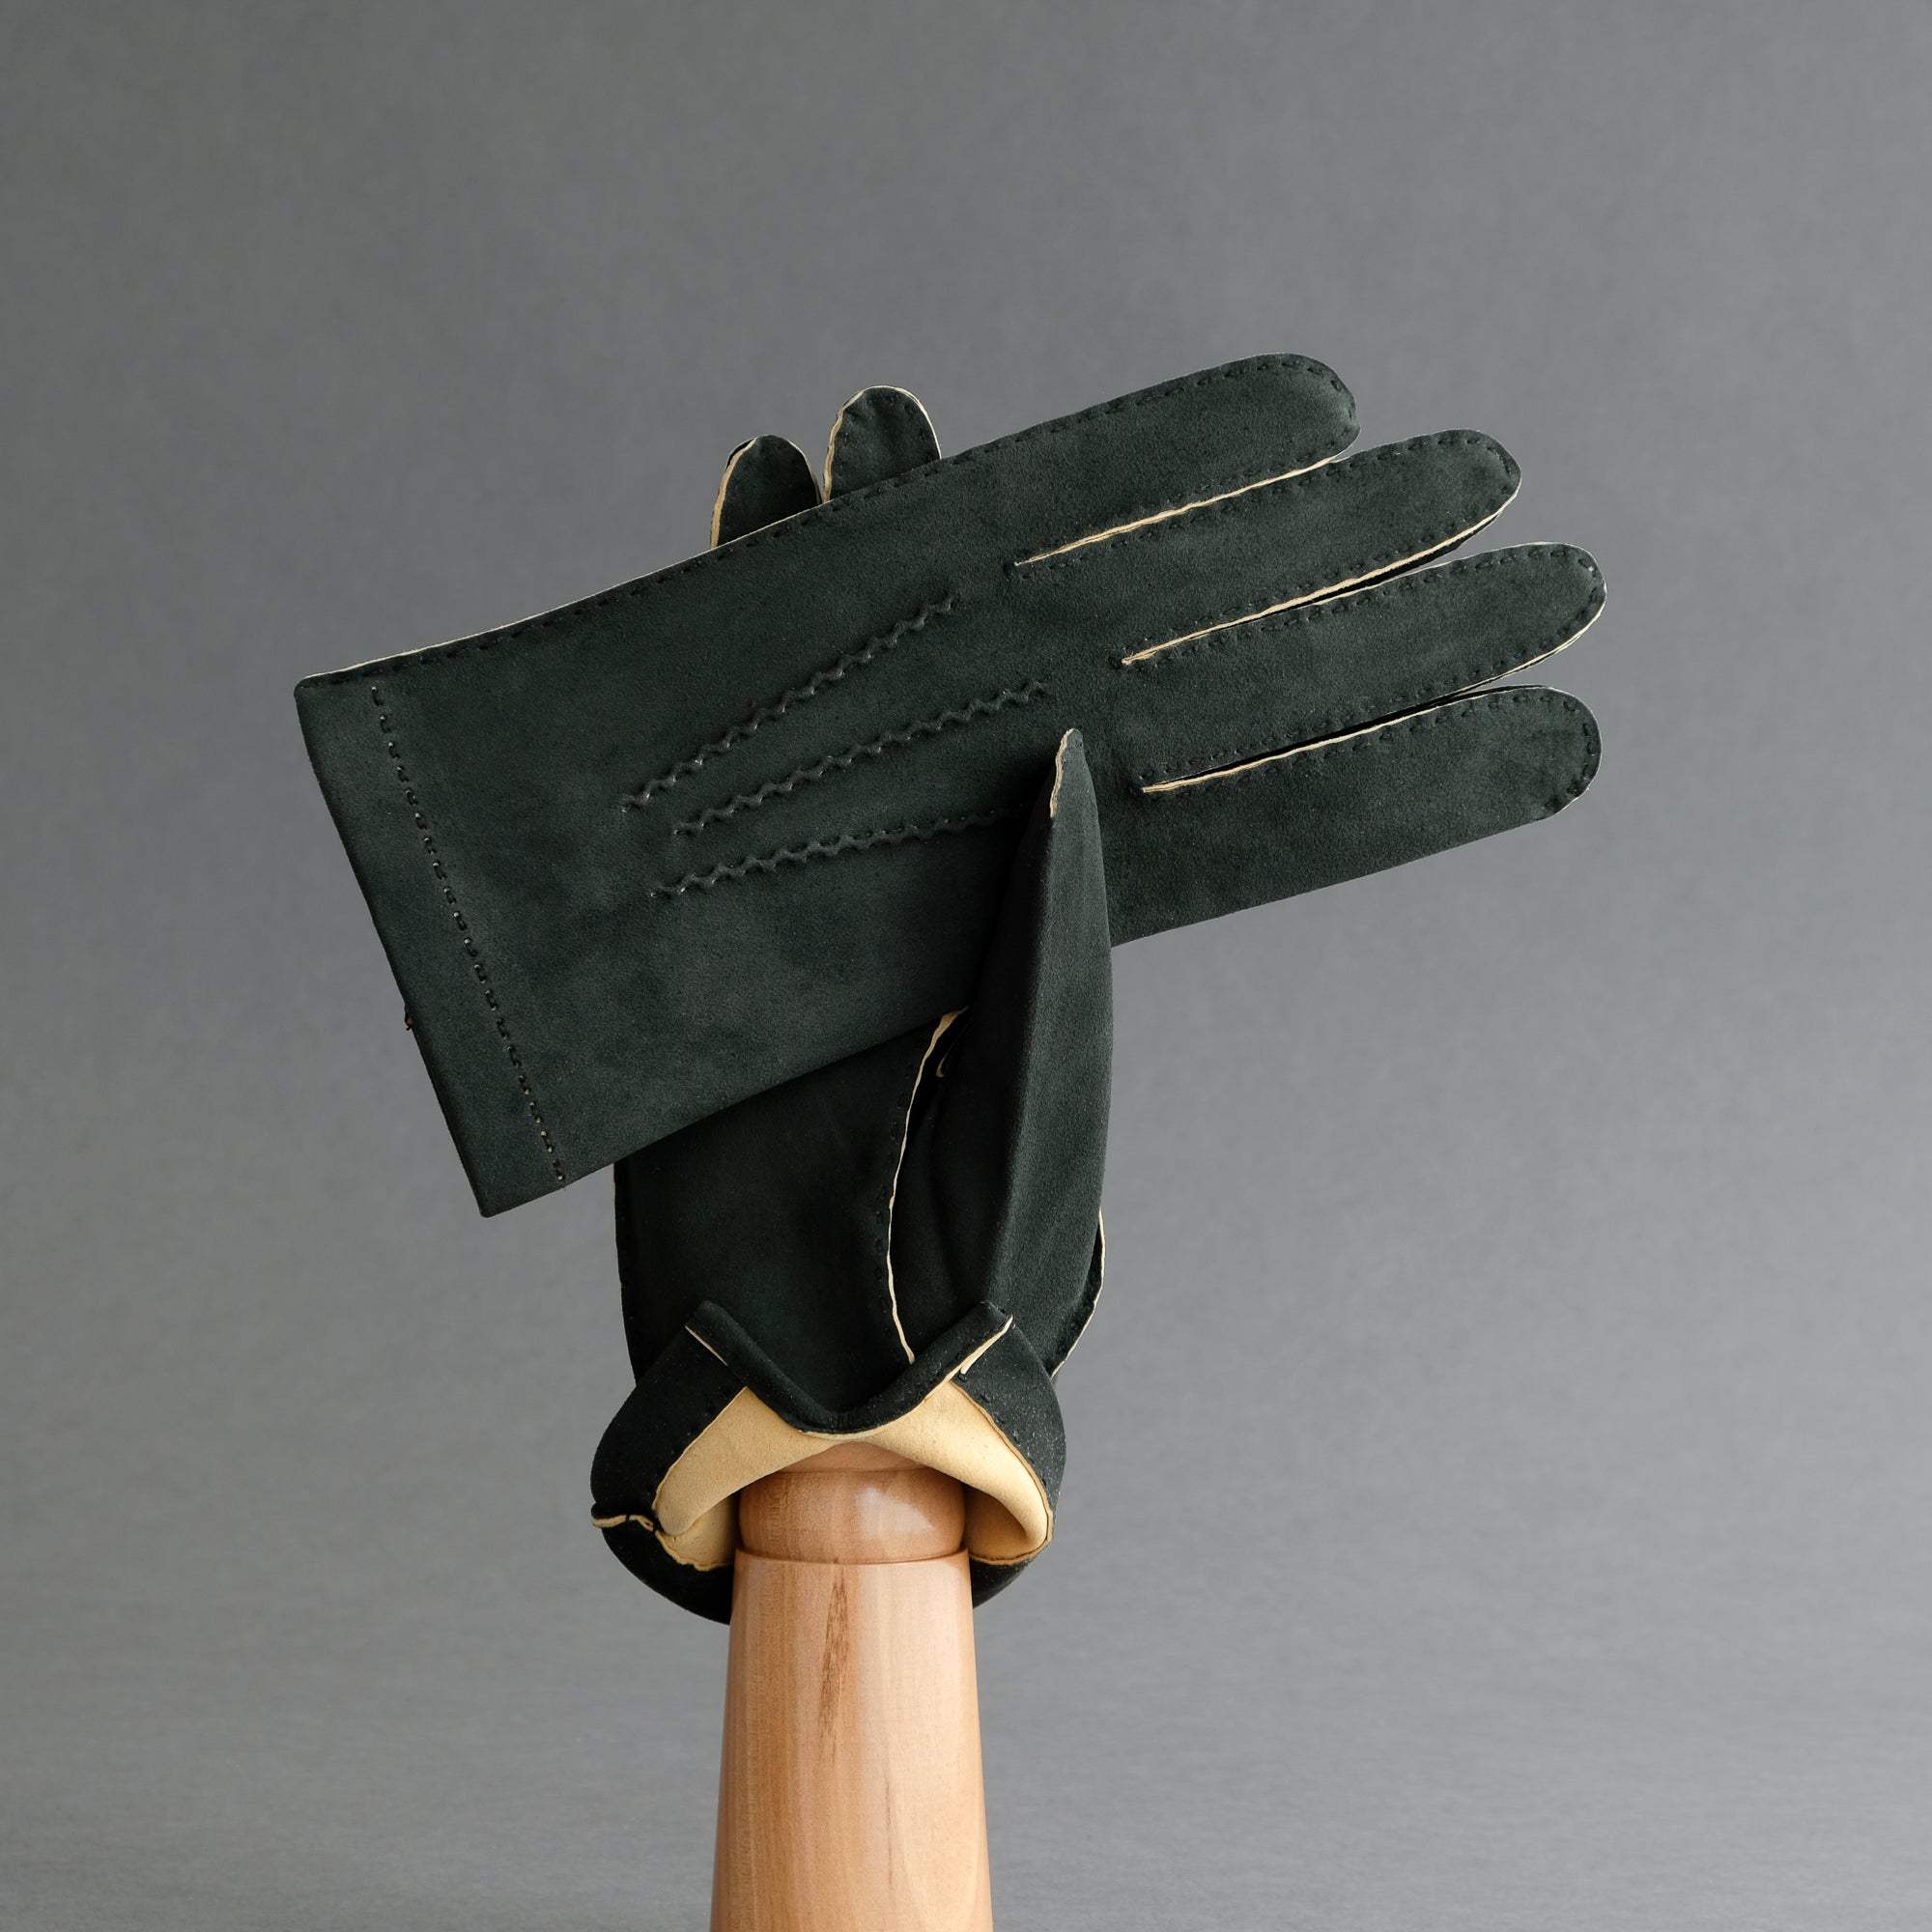 Gentlemen's Hand Sewn Unlined Gloves from Black/Green Doeskin - TR Handschuhe Wien - Thomas Riemer Handmade Gloves